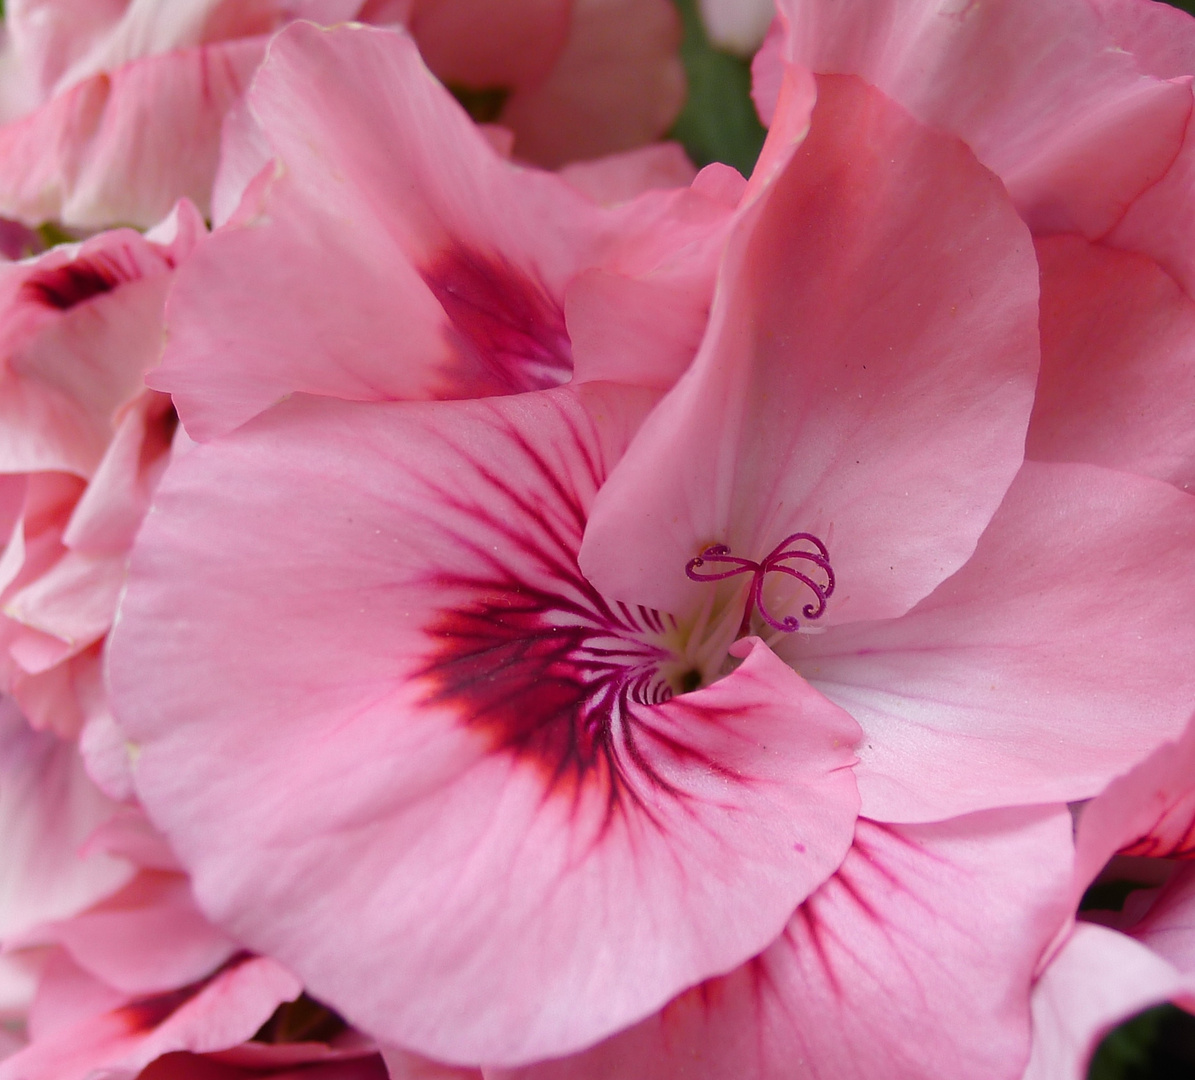 Le pélargonium rose